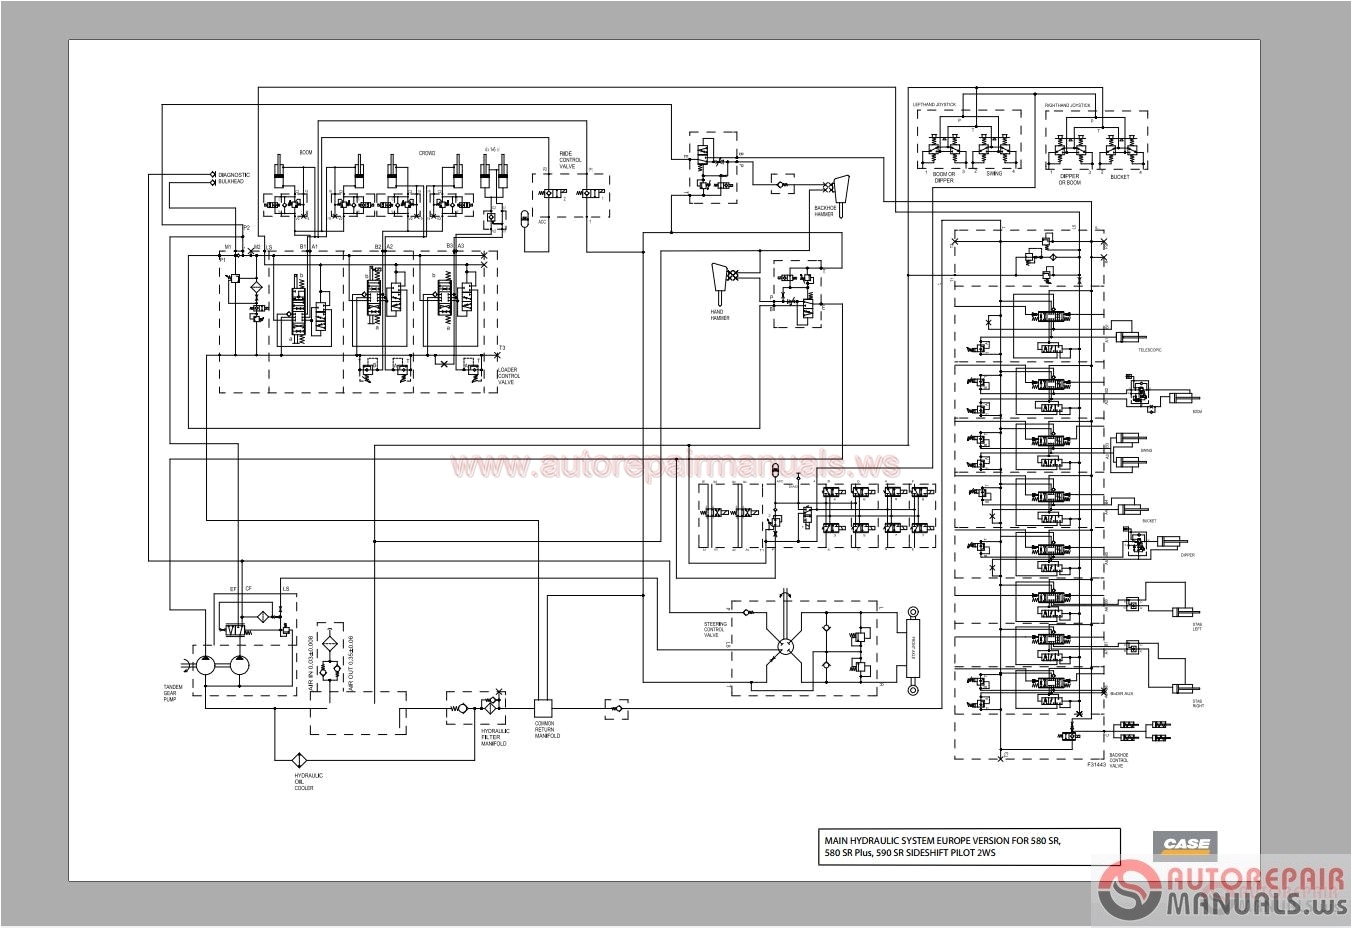 case starter wiring diagram wiring librarycase 85xt wiring diagram case 450c wiring diagram case 1845c starter